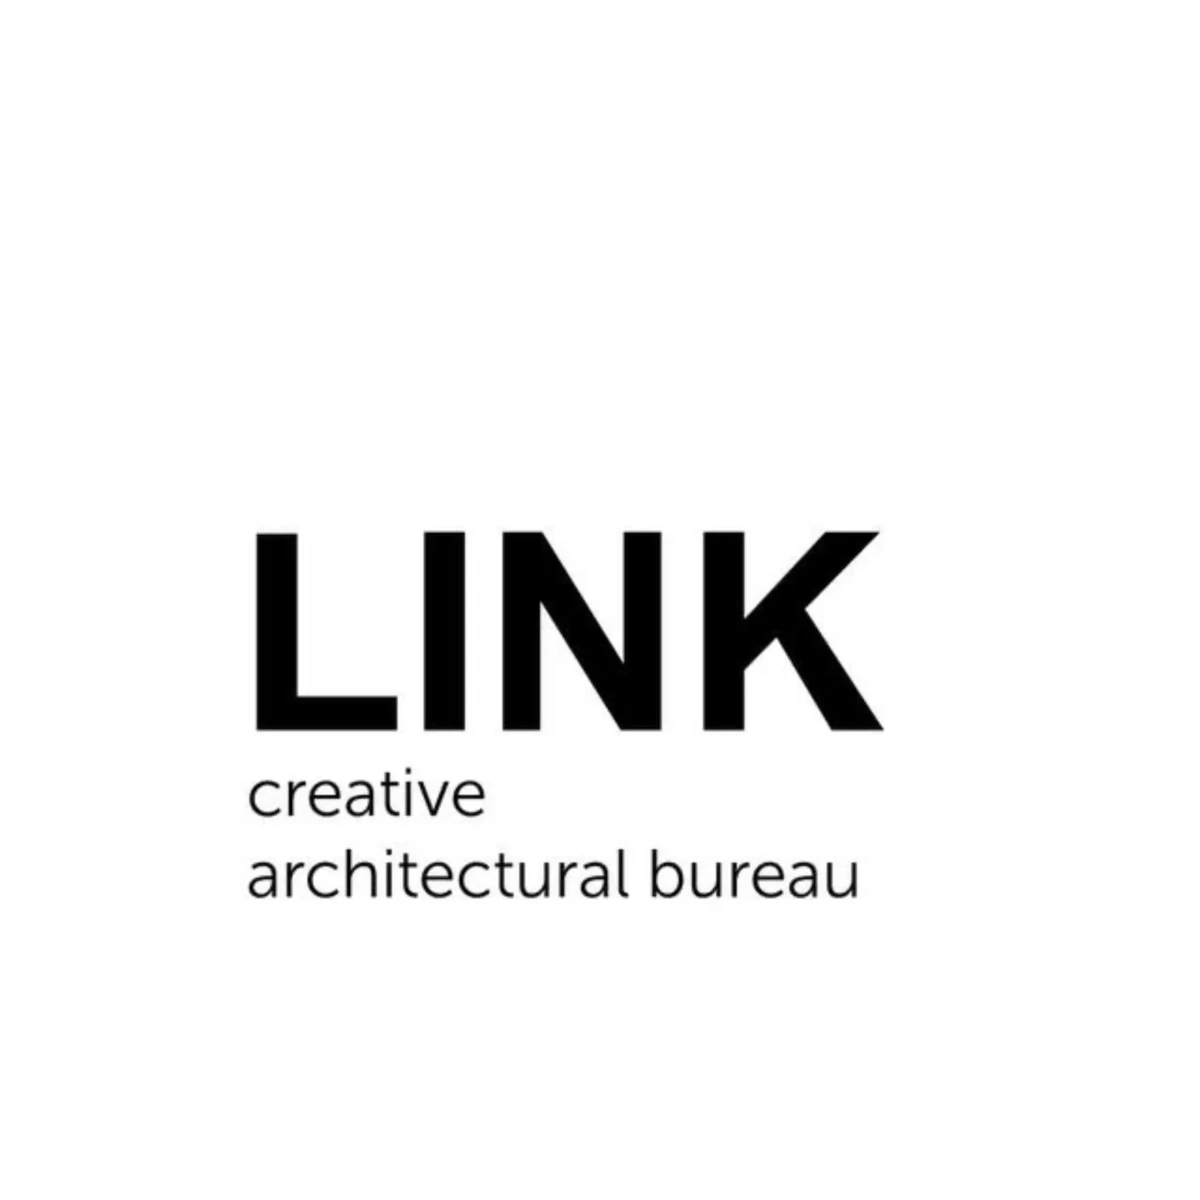 LINK creative architectural bureau